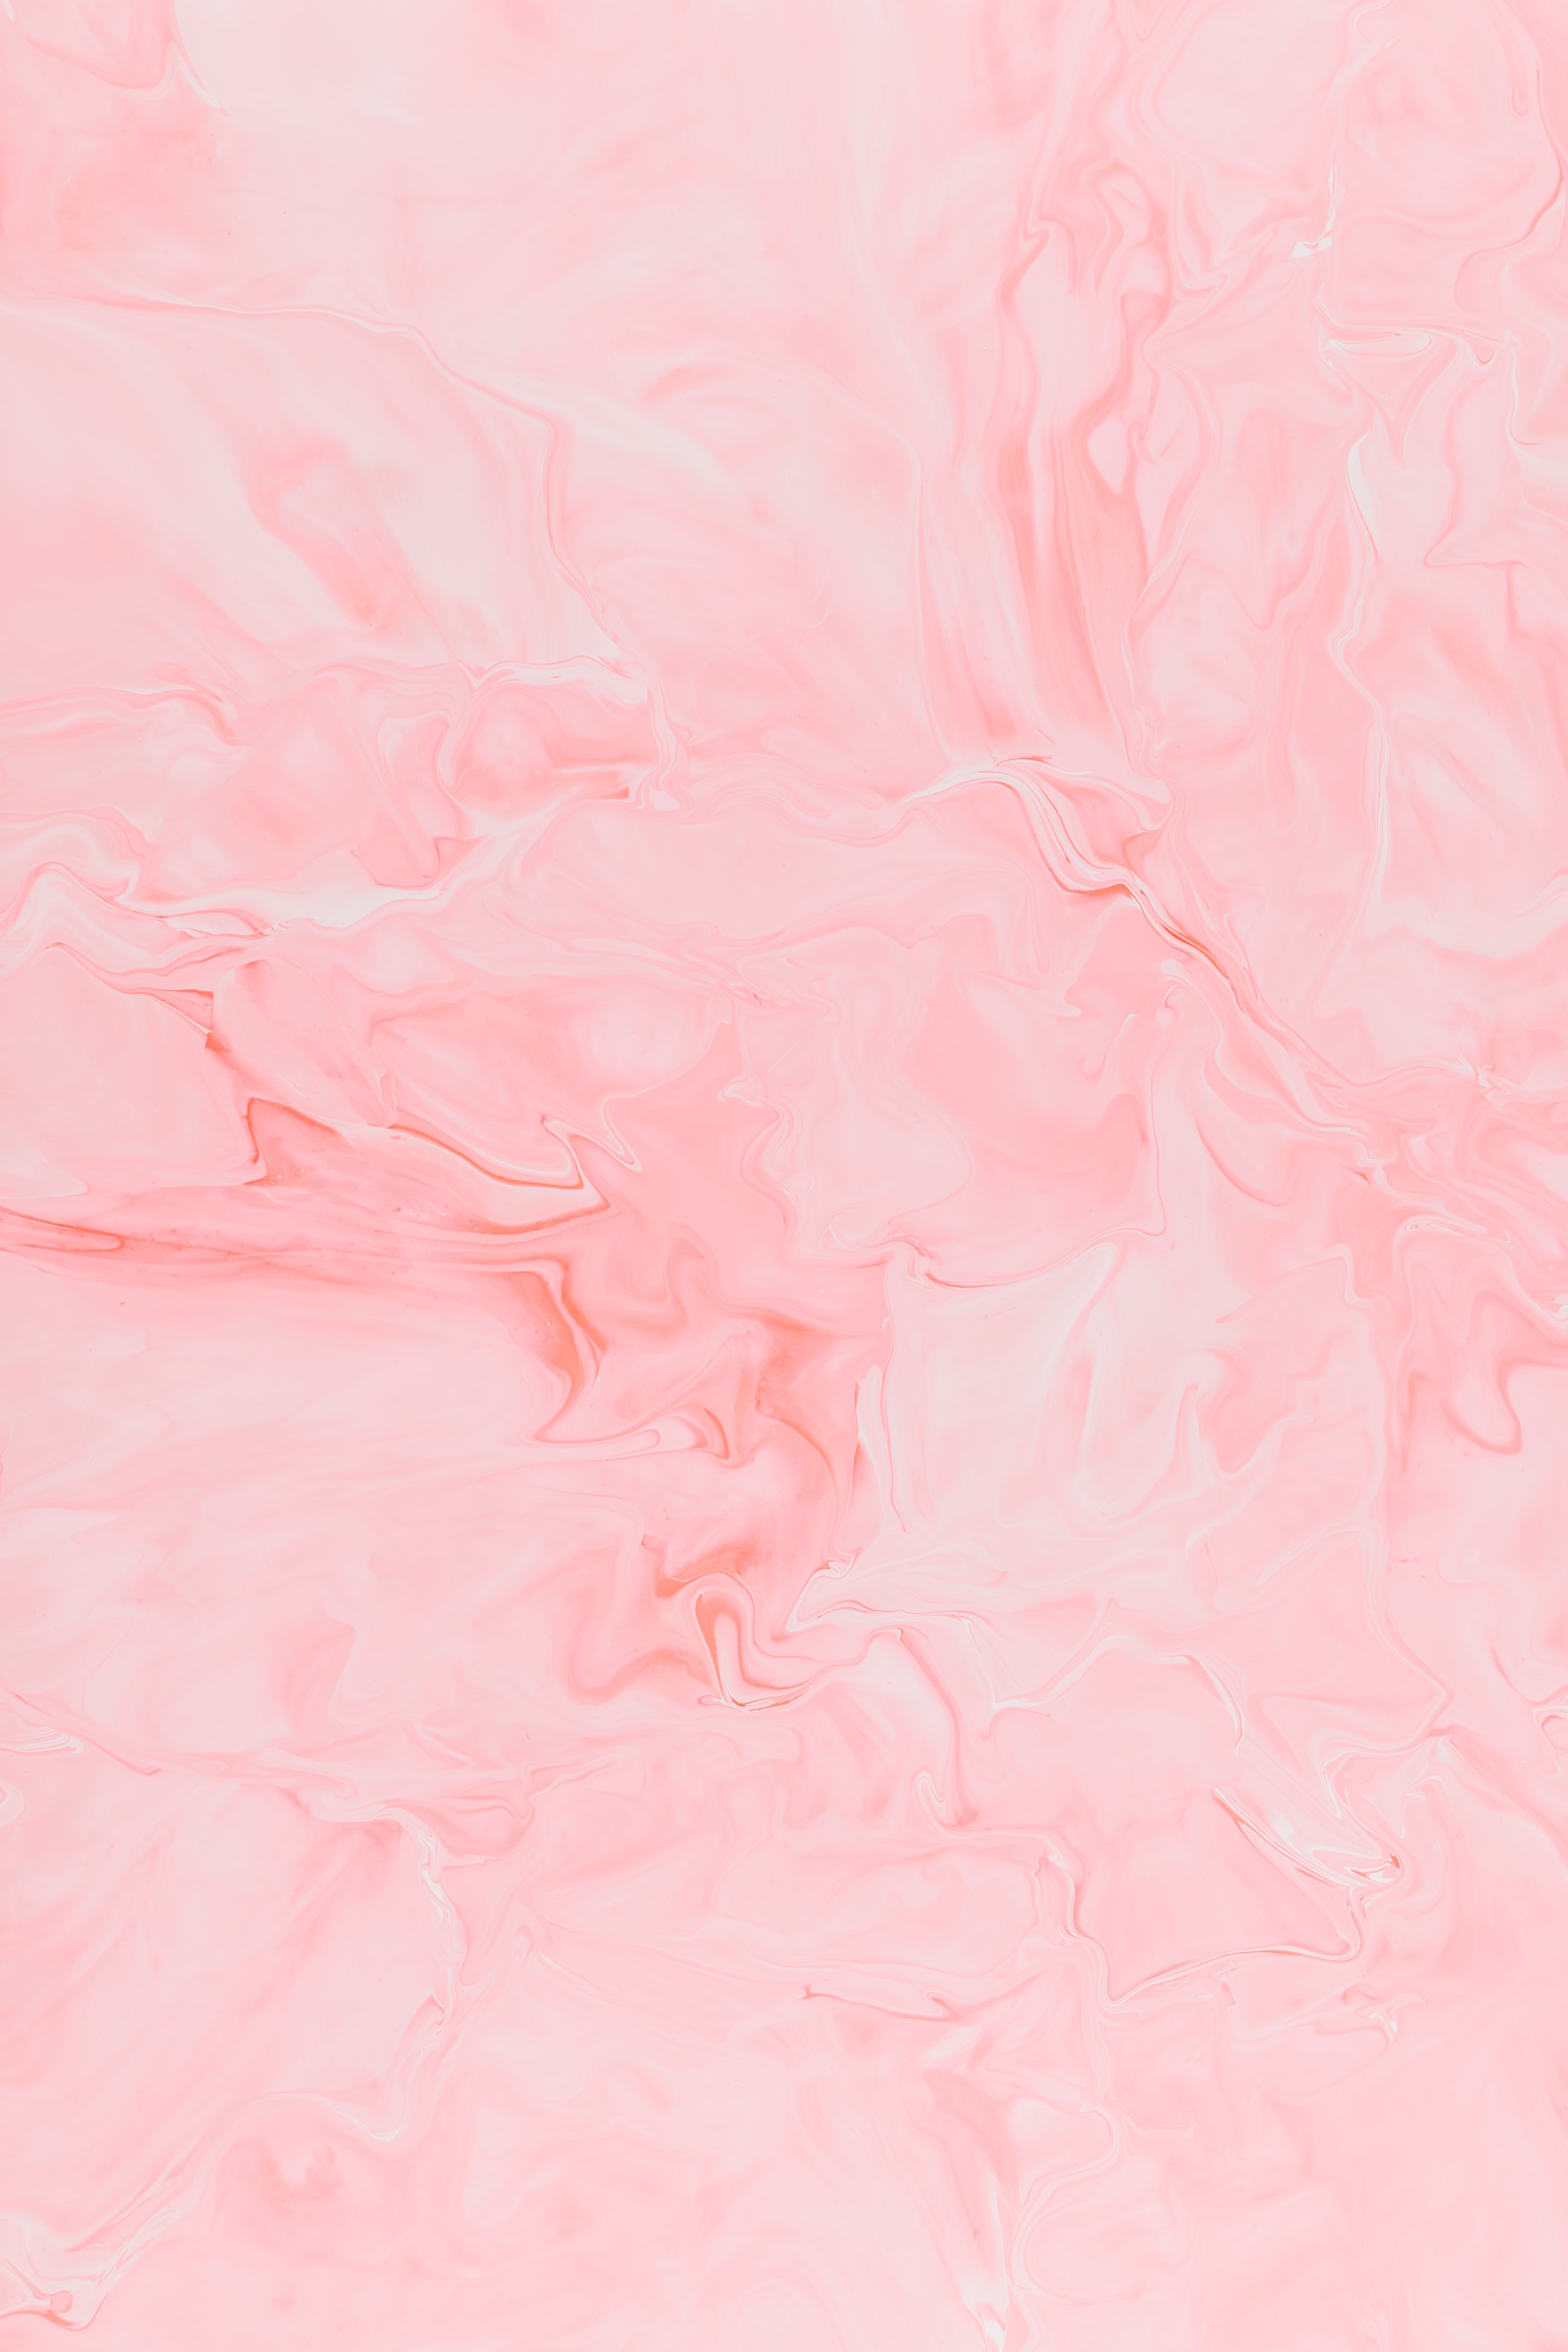 63+ Pink Background Hd